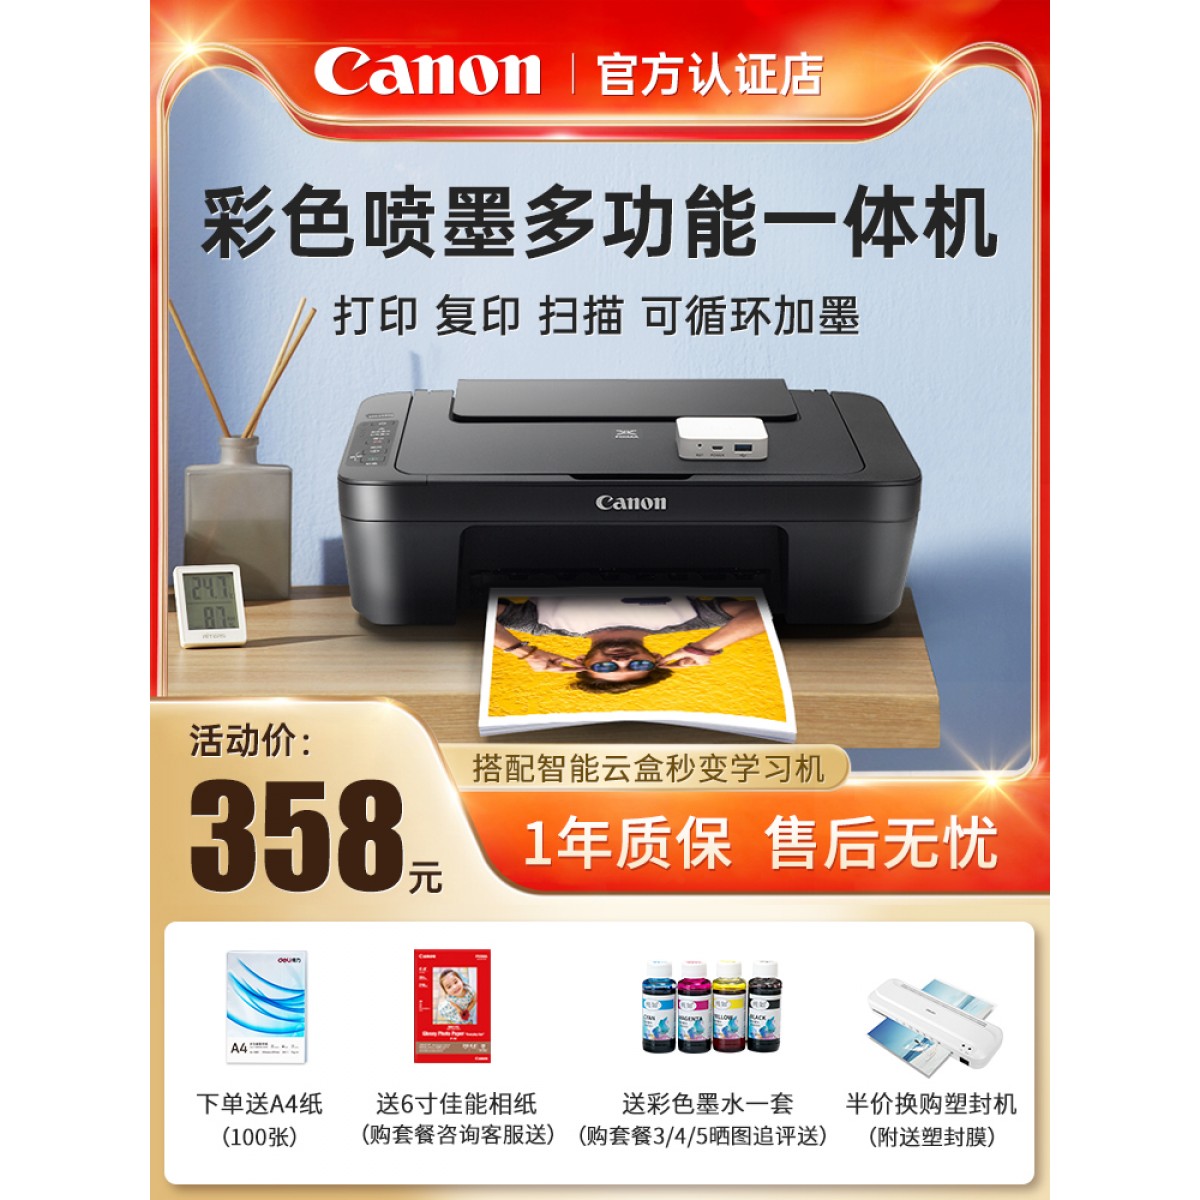 canon佳能MG2580S彩色喷墨照片打印机家用小型作业打印机连供墨仓迷你无线学生办公A4复印一体机家庭手机wifi